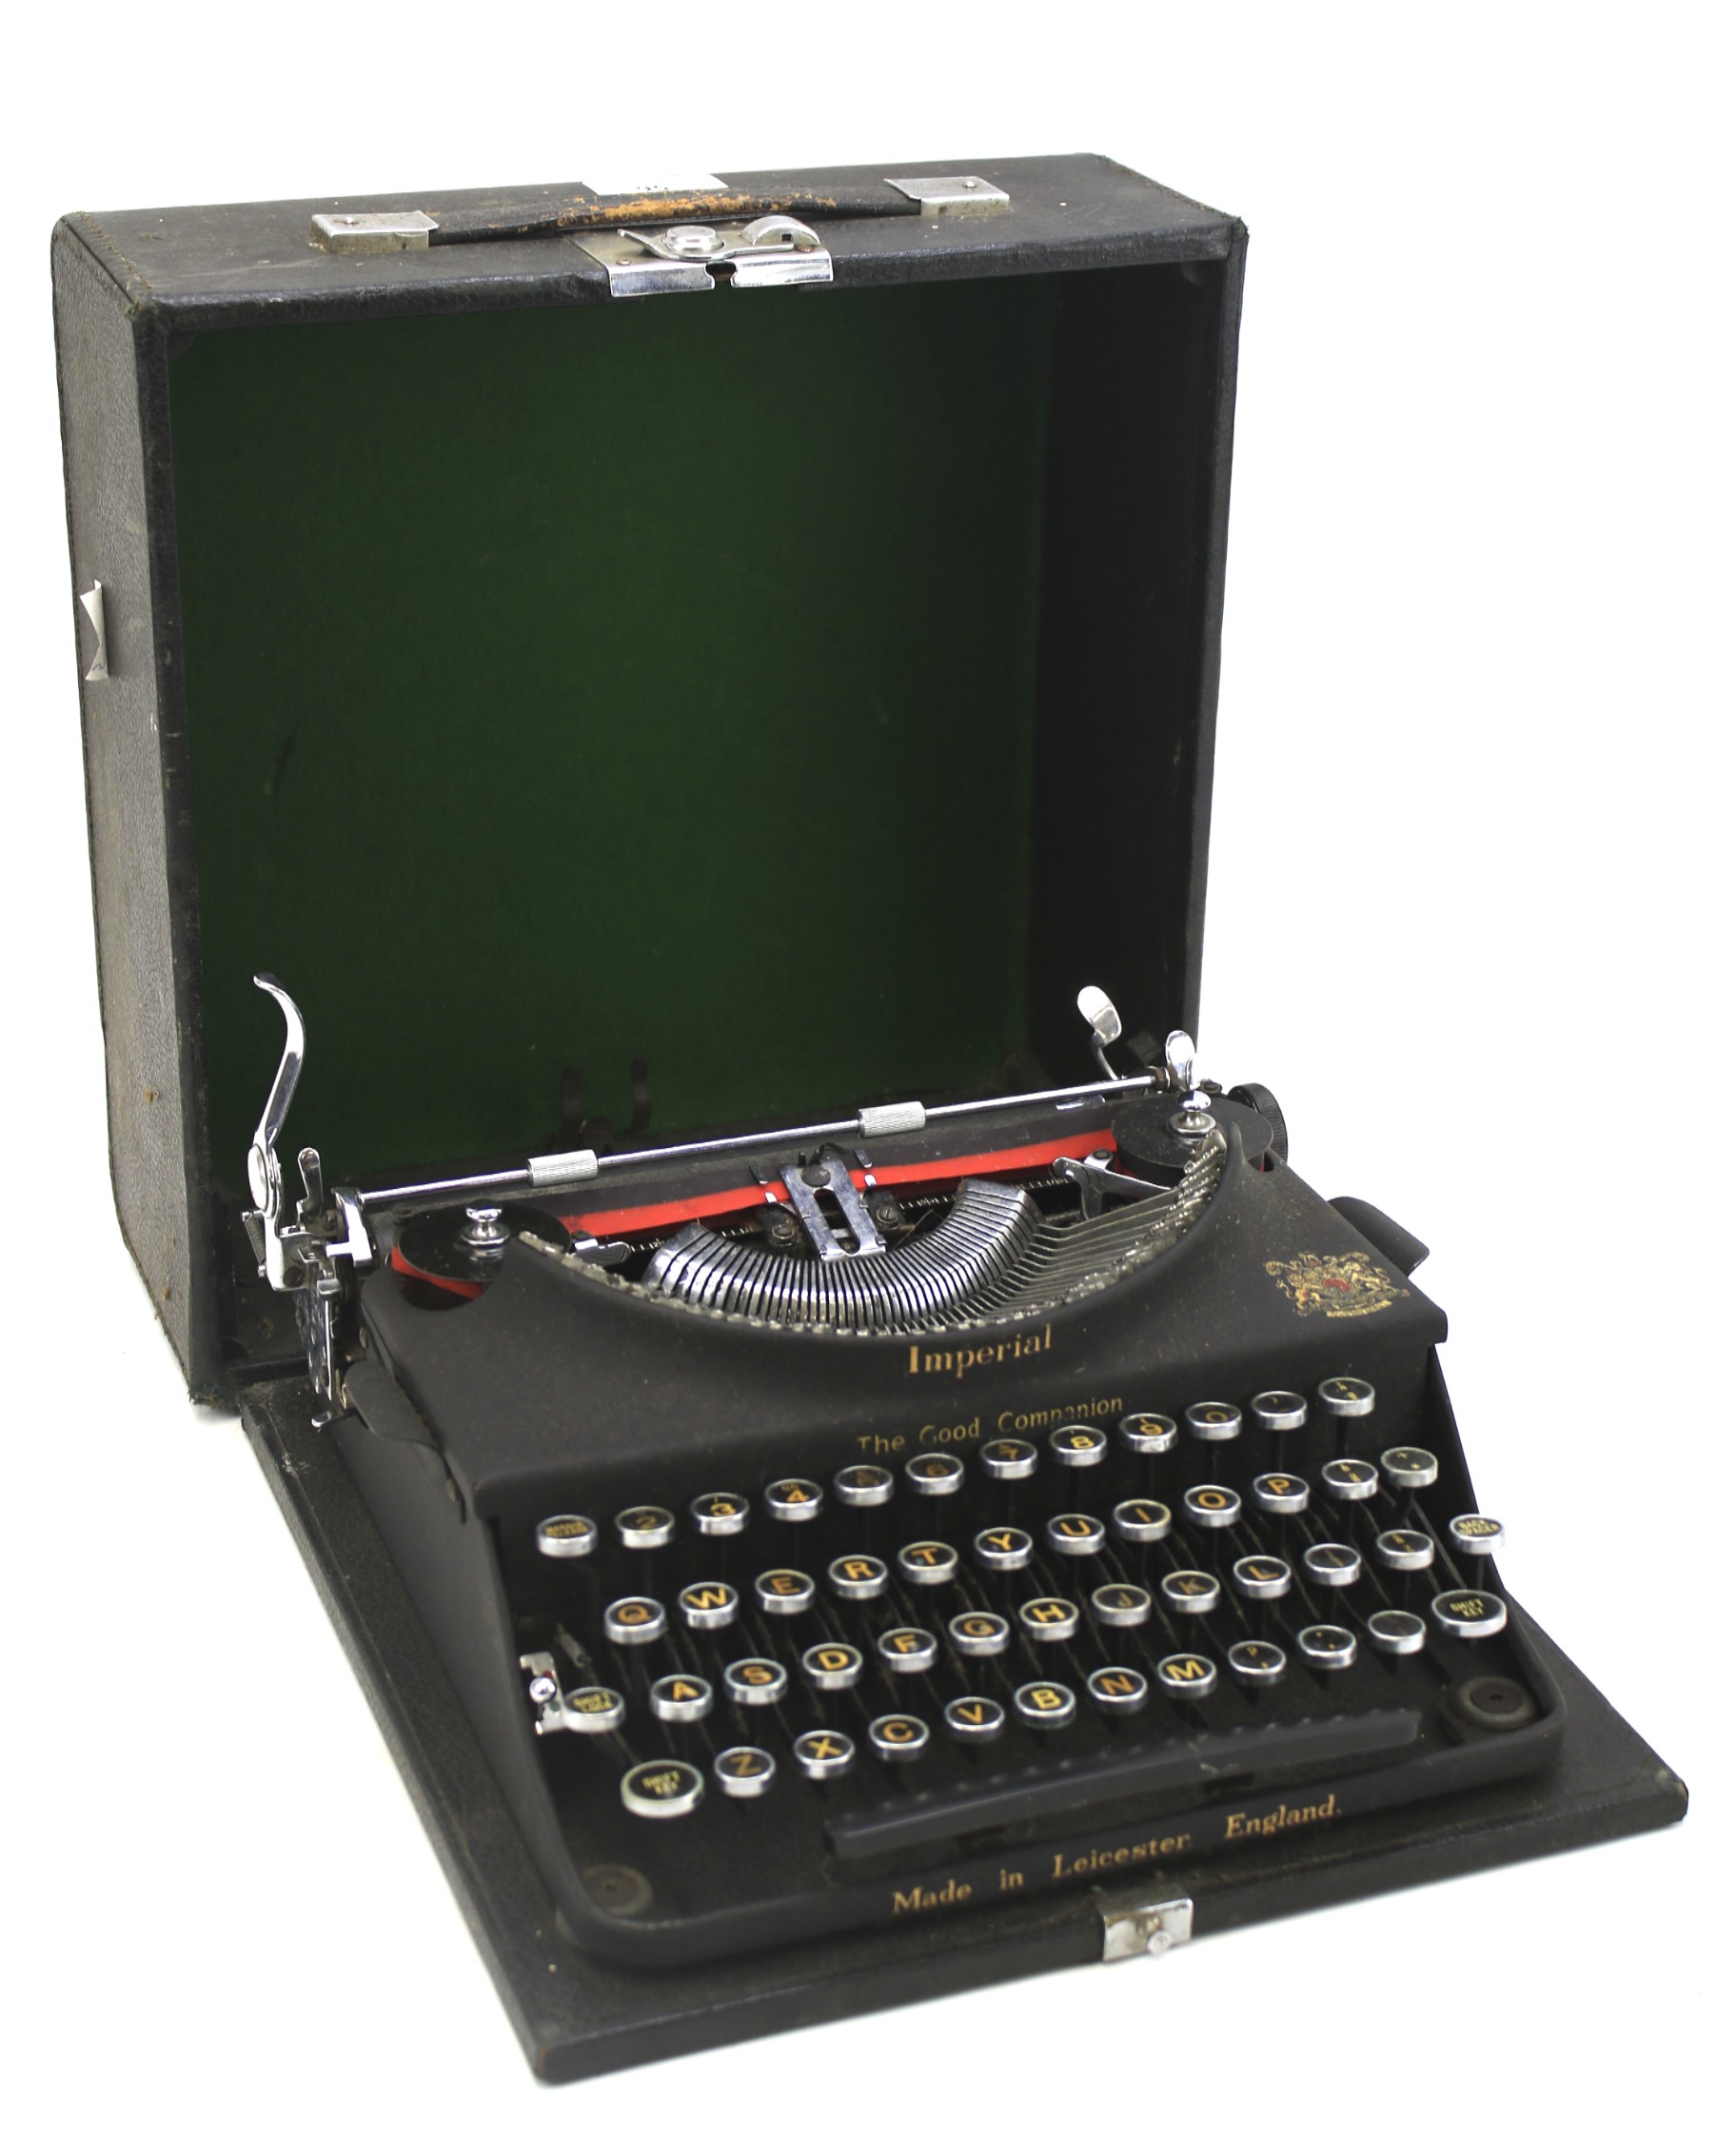 An Imperial portable typewriter.